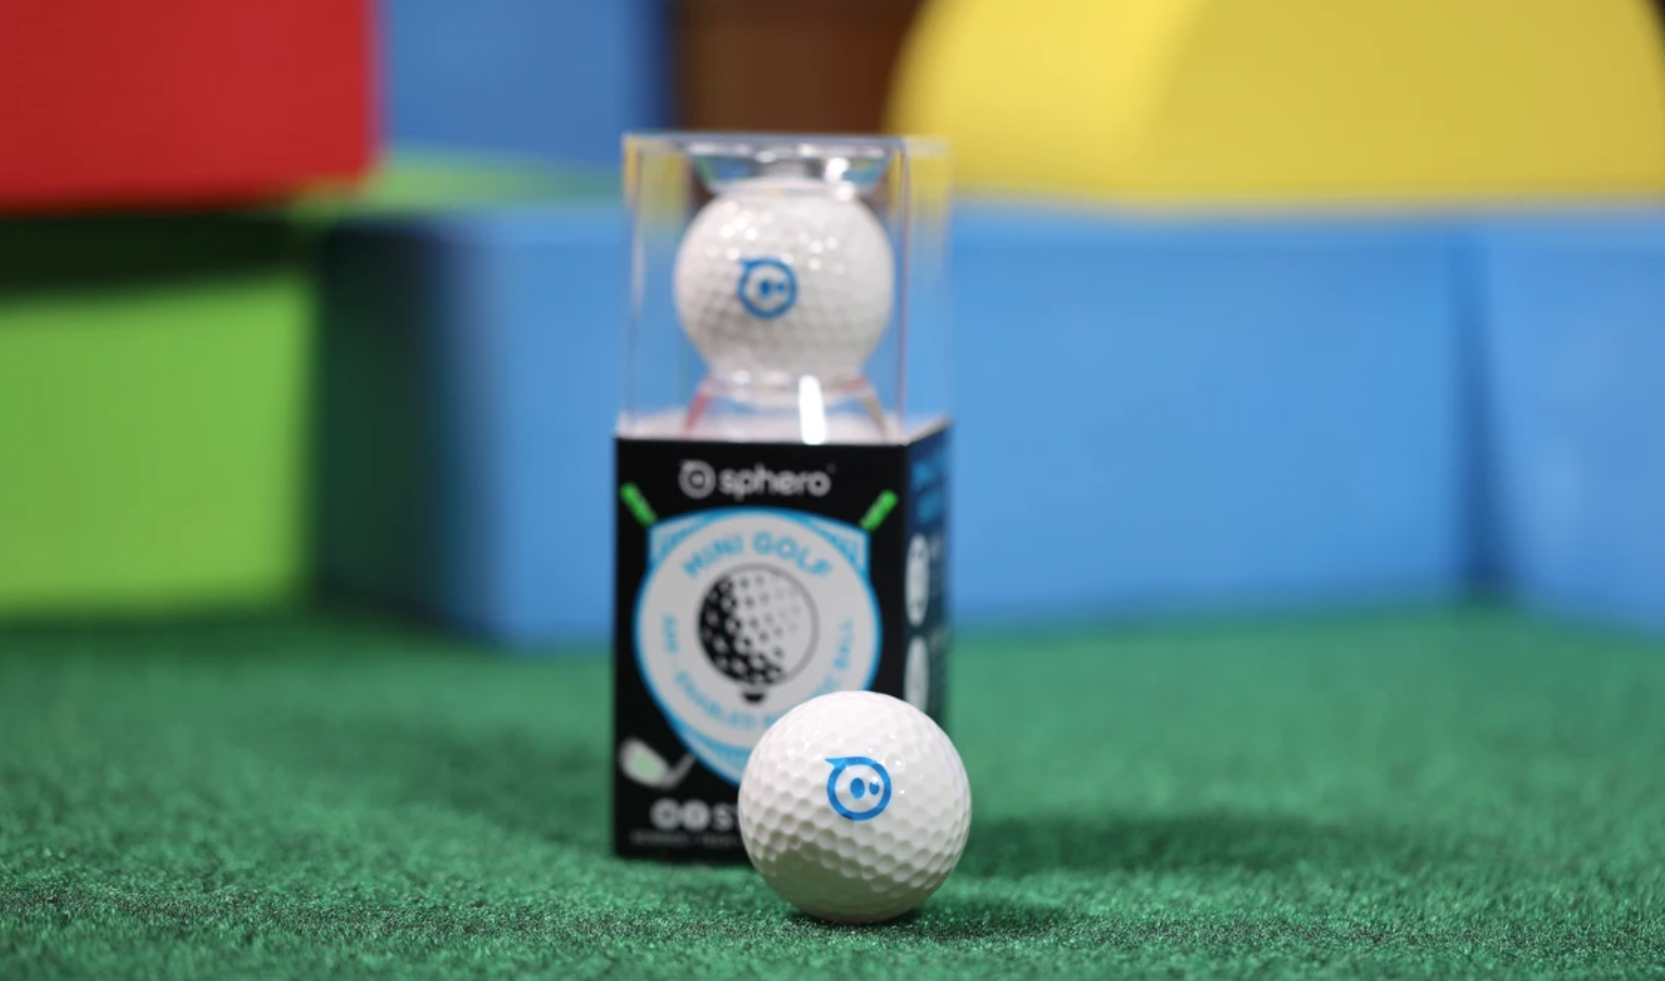 the sphero mini golf STEAM kit